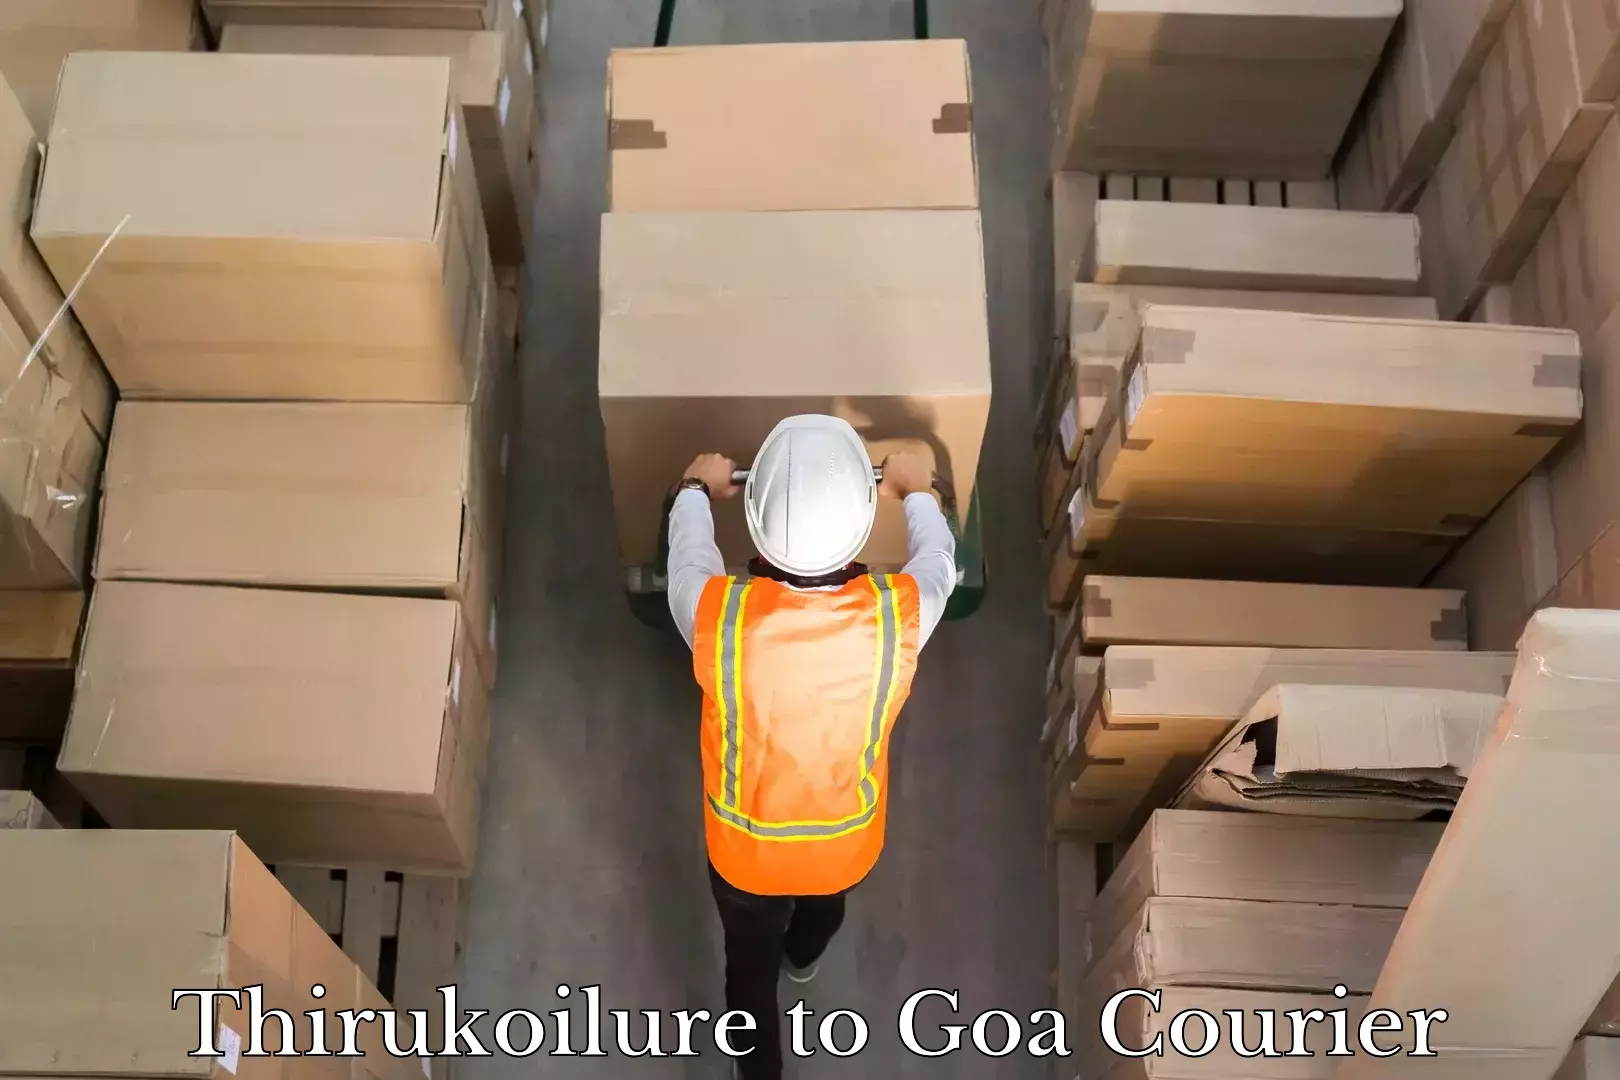 High-speed parcel service Thirukoilure to Goa